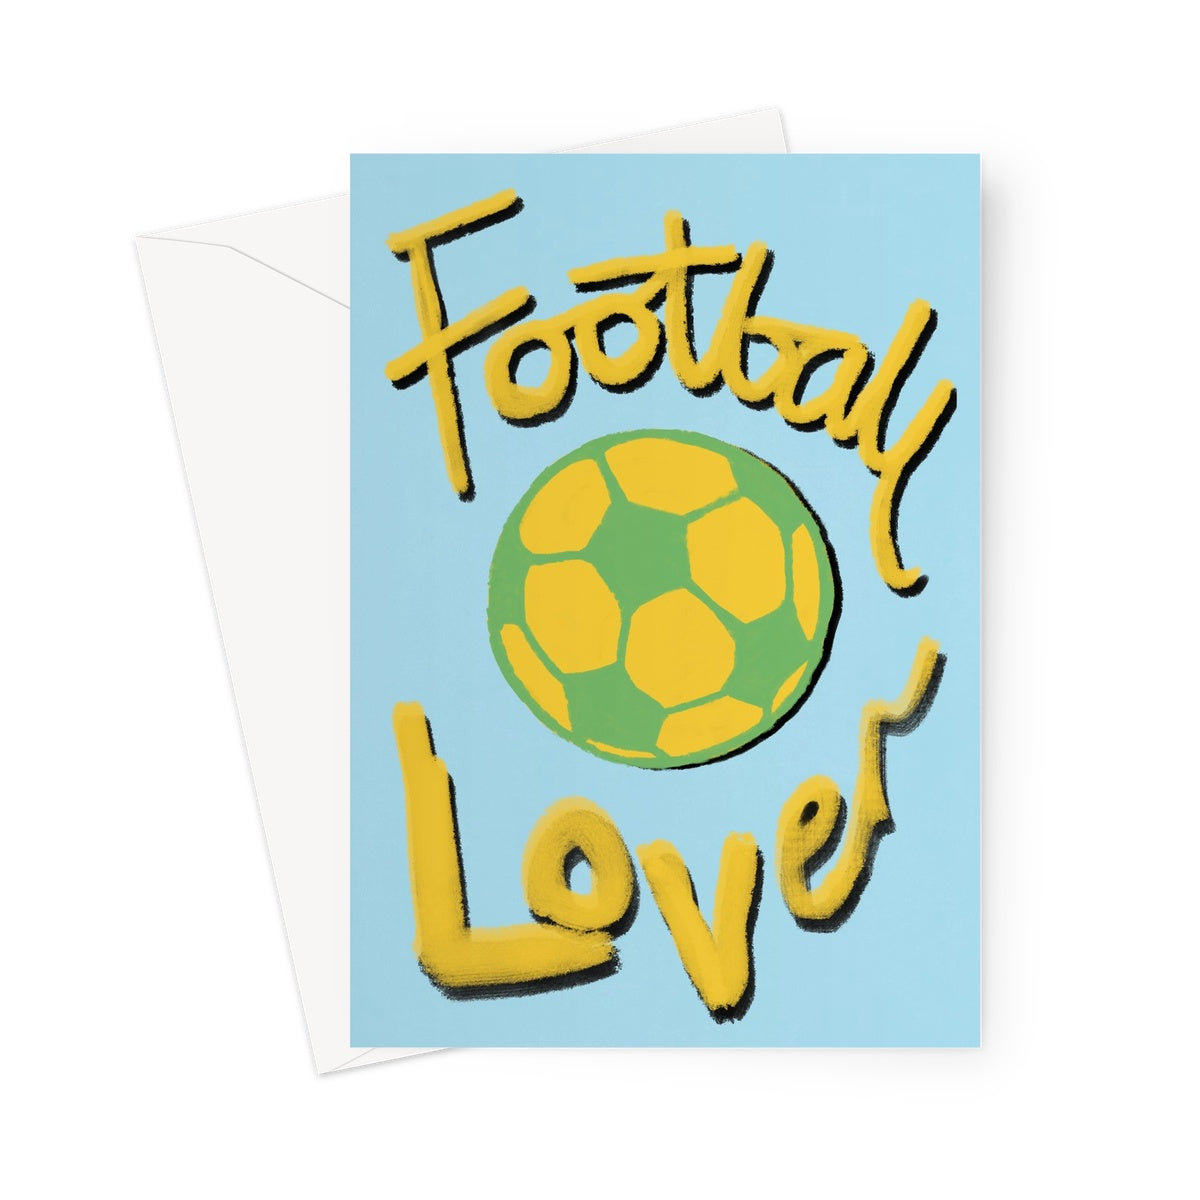 Football Lover Print - Light Blue, Yellow, Green Greeting Card